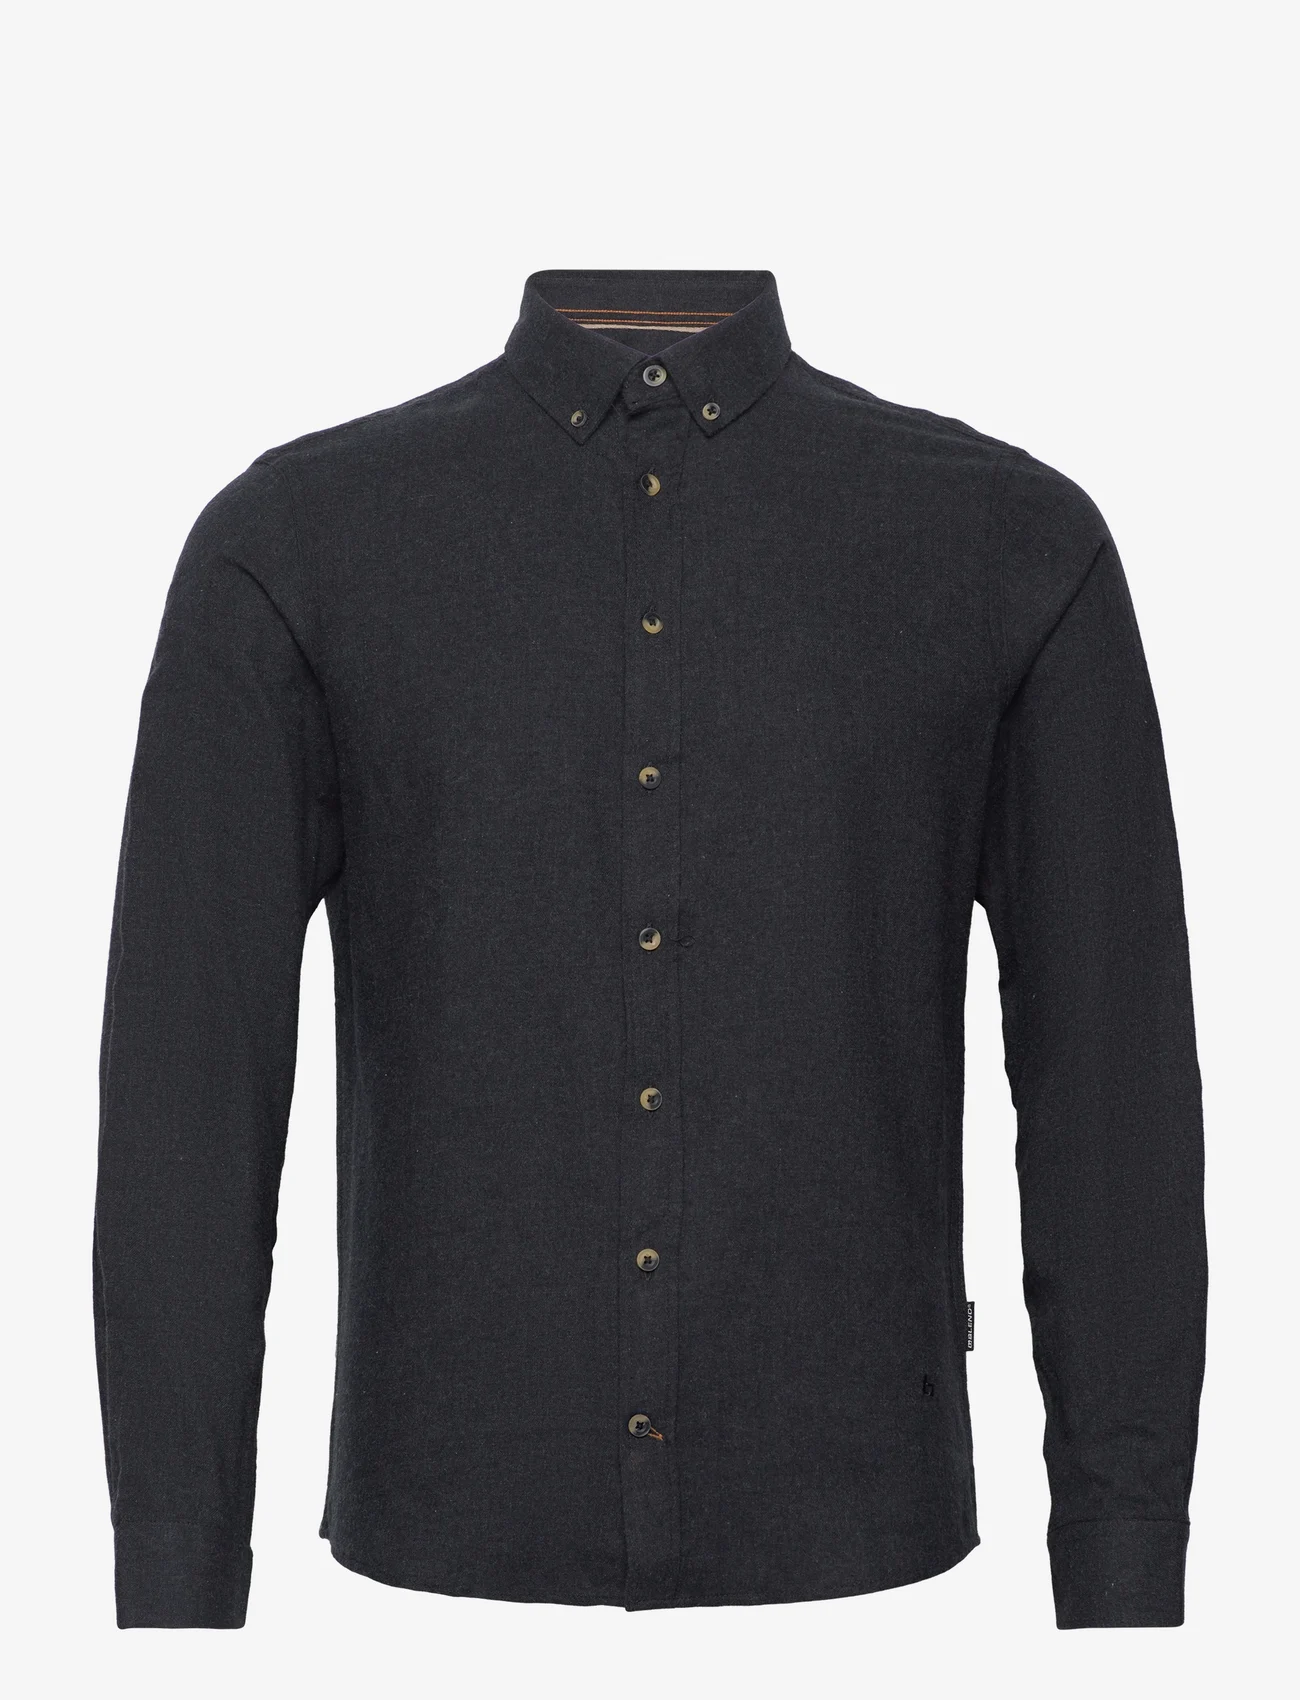 Blend - BHBURLEY shirt - lowest prices - black - 0